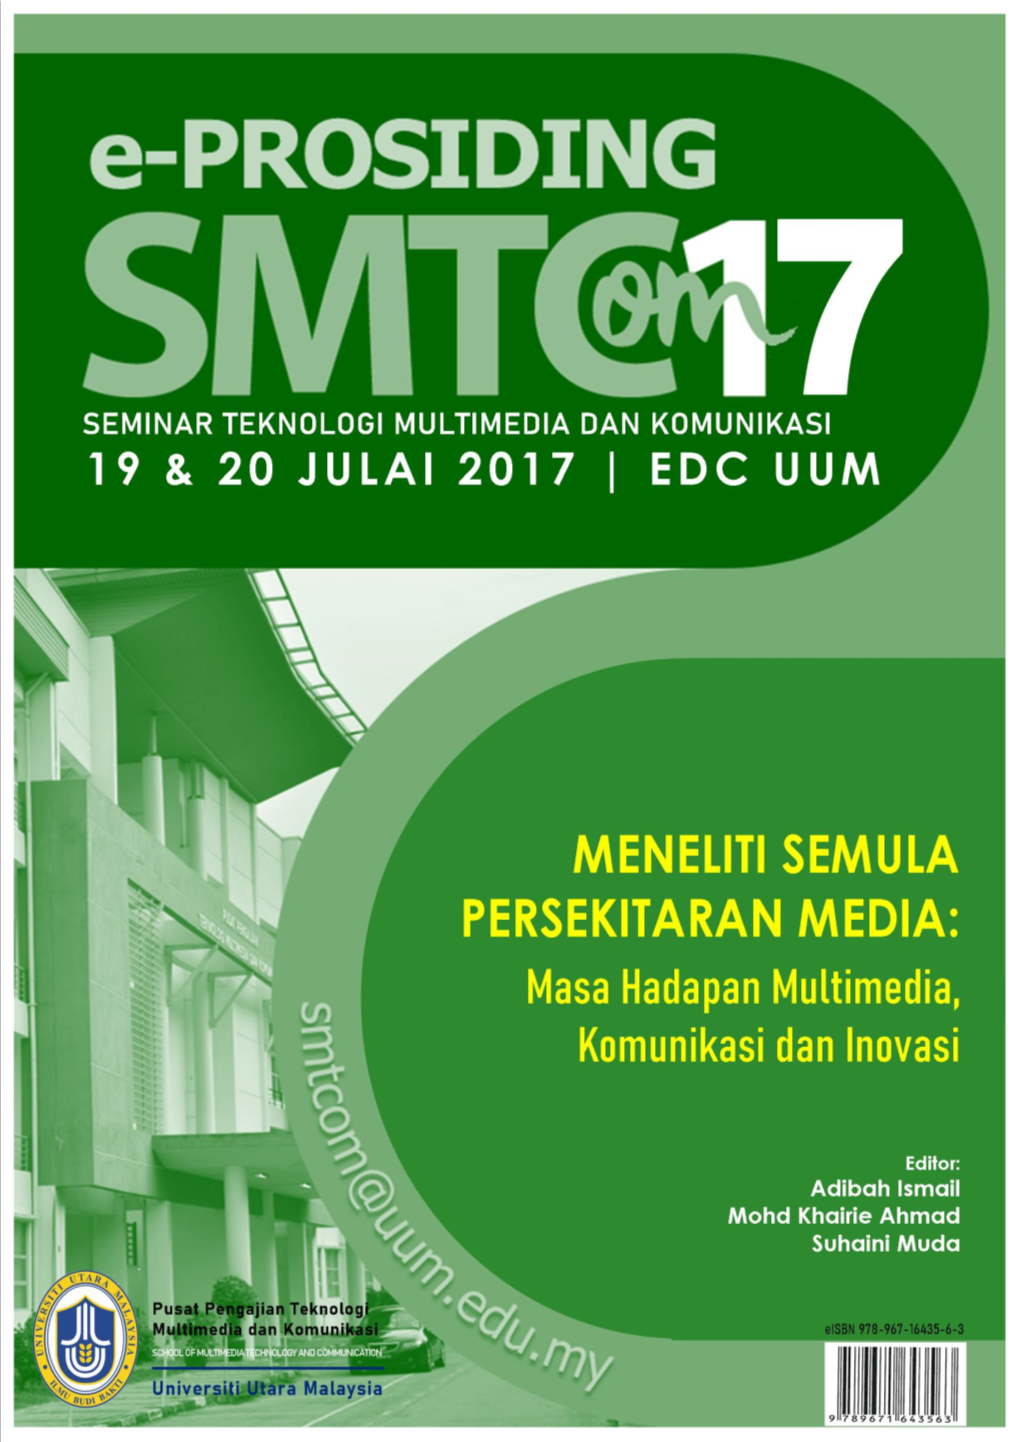 E-PROSIDING Seminar Teknologi Multimedia Dan Komunikasi 2017 [Smtcom’17]